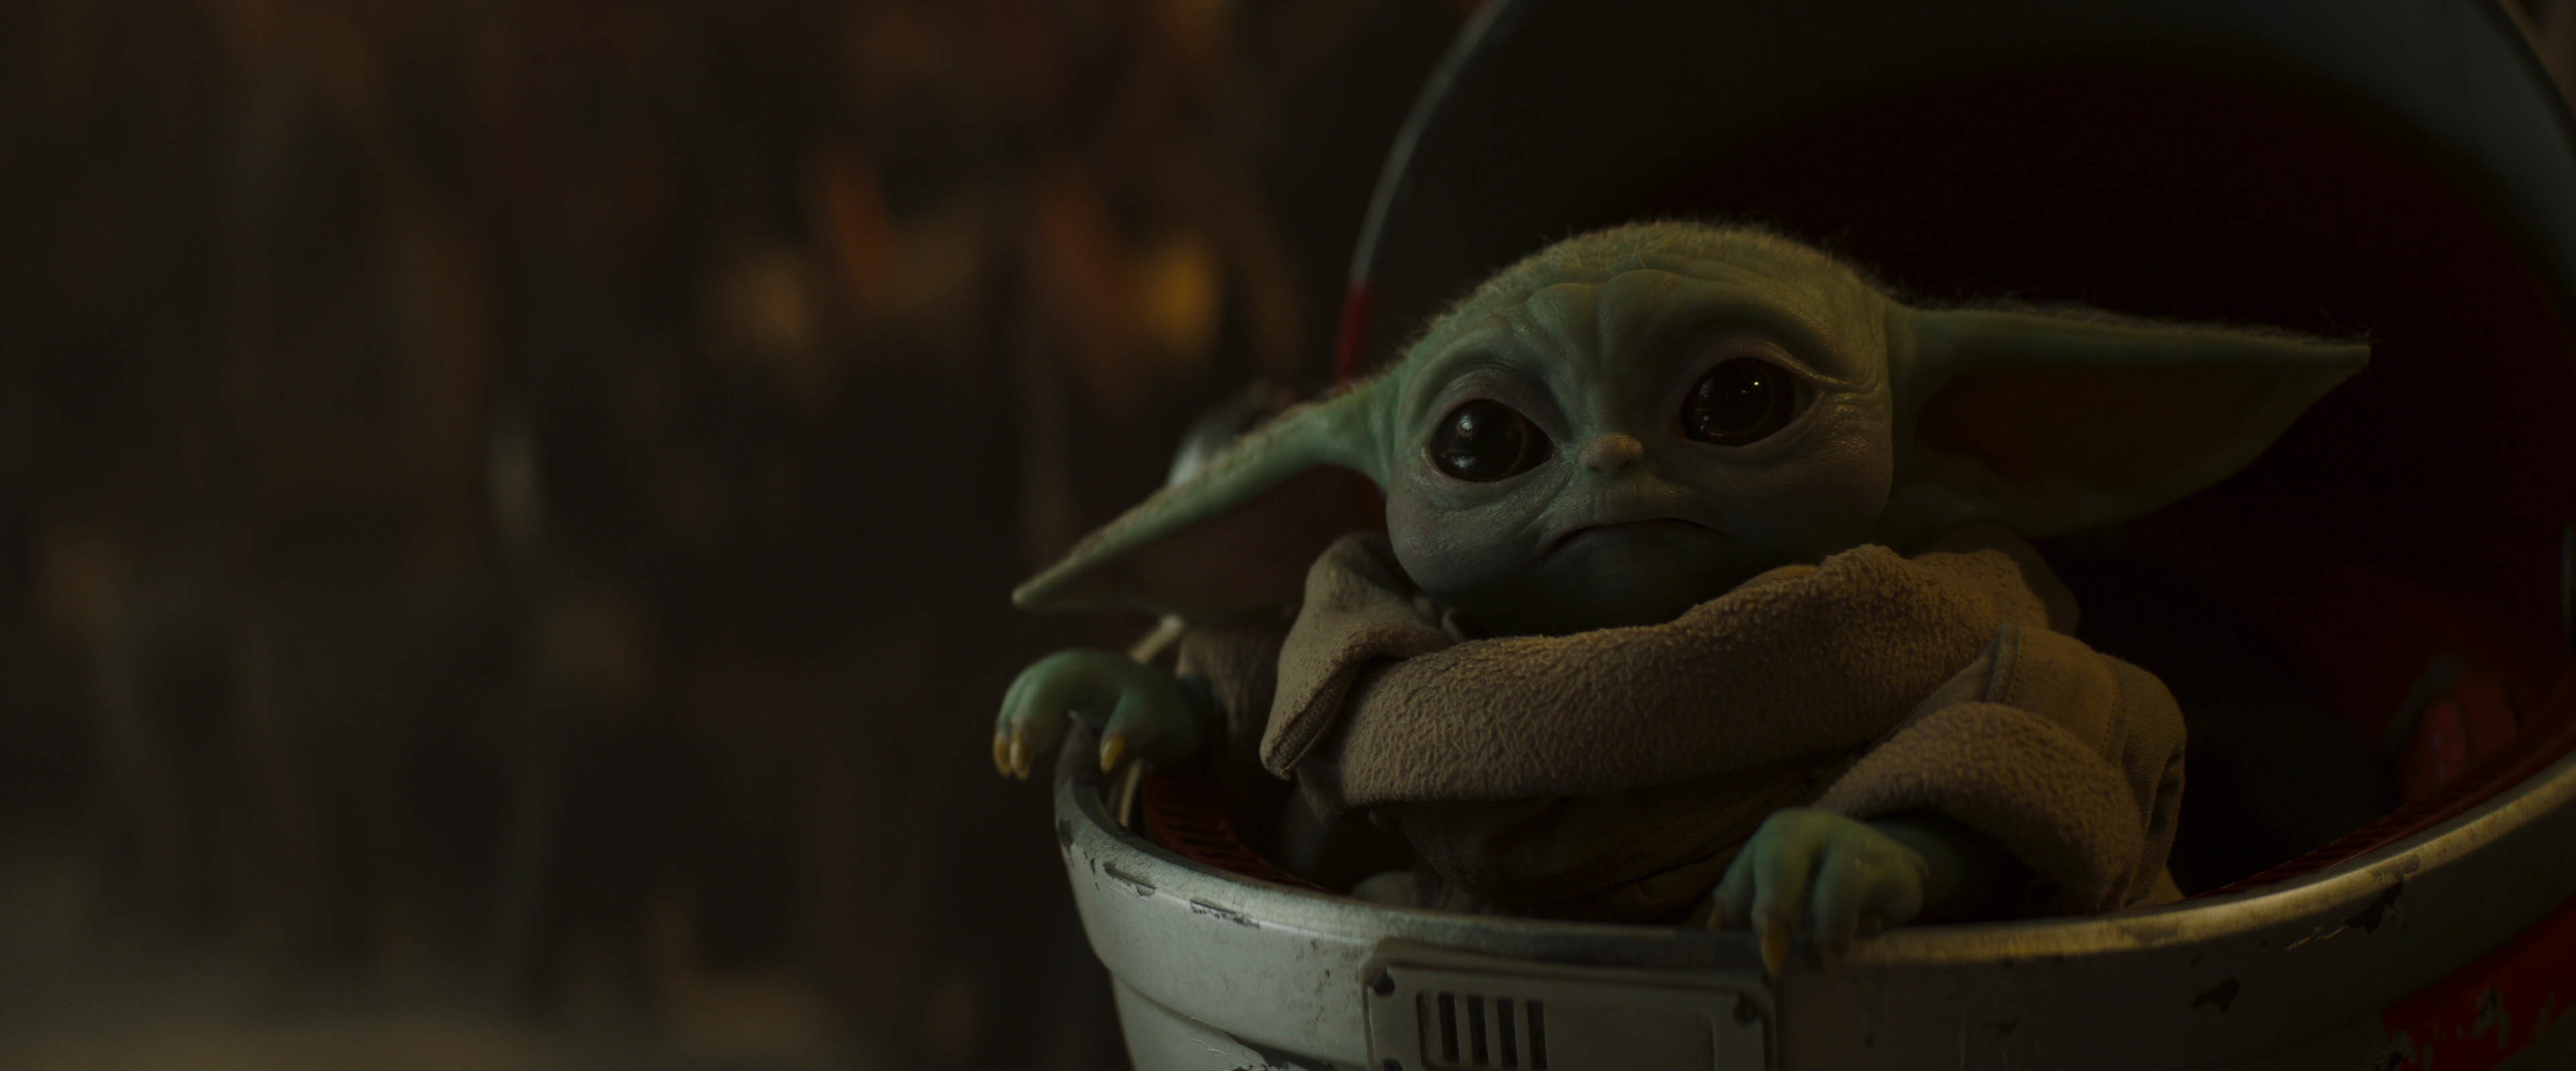 Baby Yoda จะปรากฏในหนังสือของ Boba Fett หรือไม่?